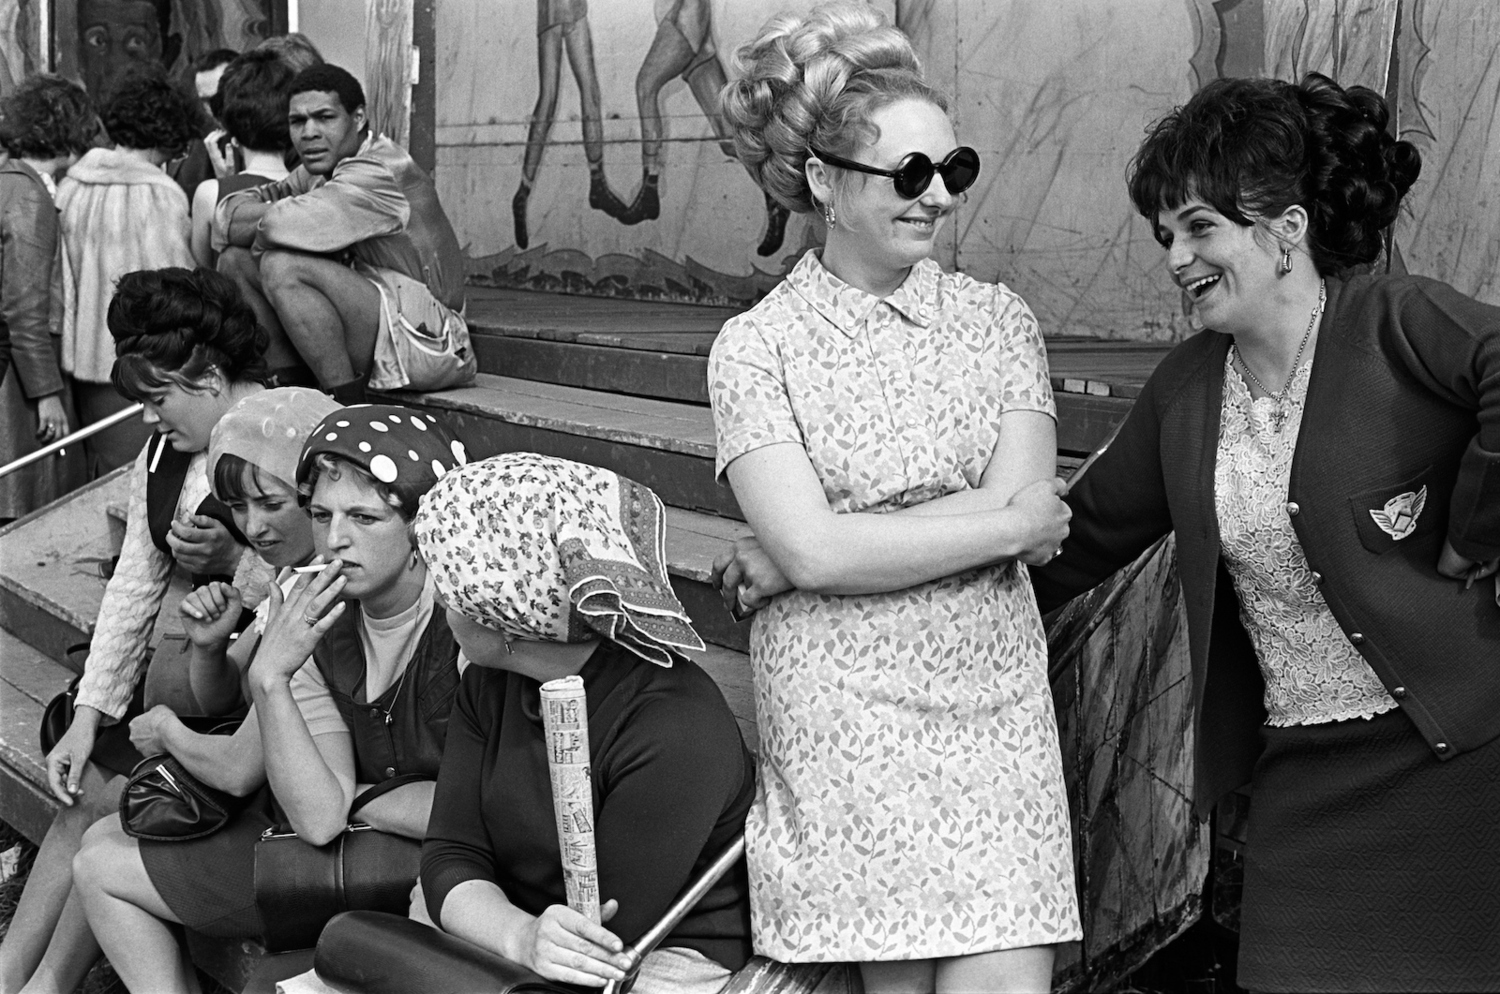 Gypsie women derby Epsom Downs Racecourse, fun fair on The Hill, 1969